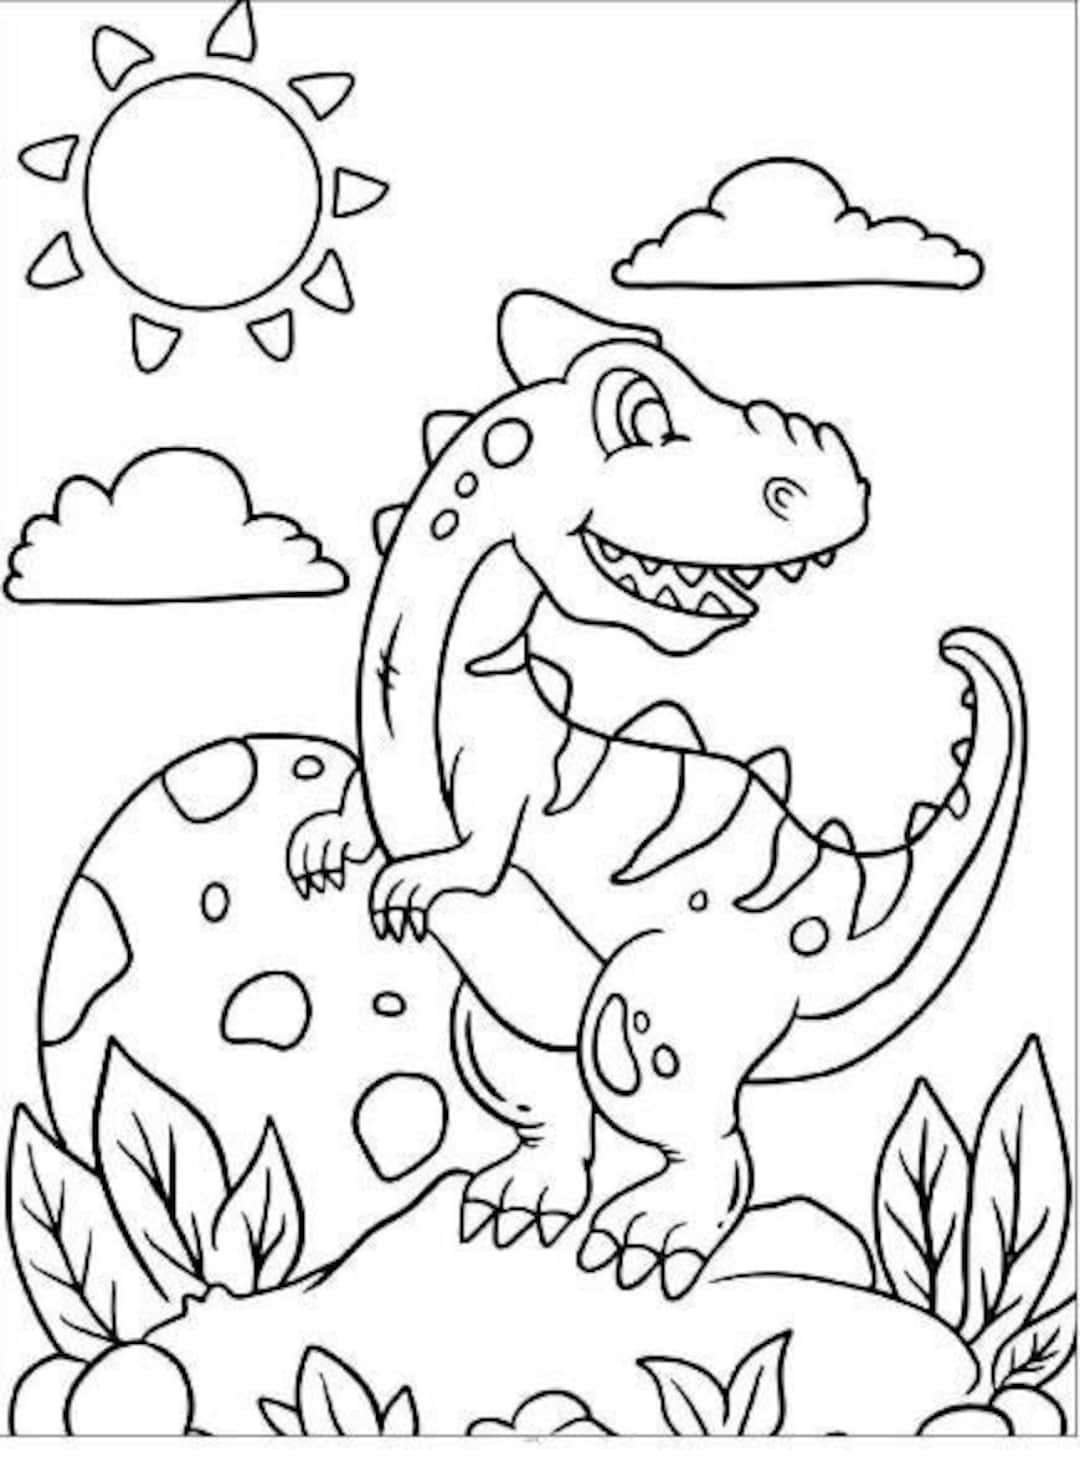 Dinosaur coloring book printable coloring sheets kids activity book dinosaur printables pdf coloring book